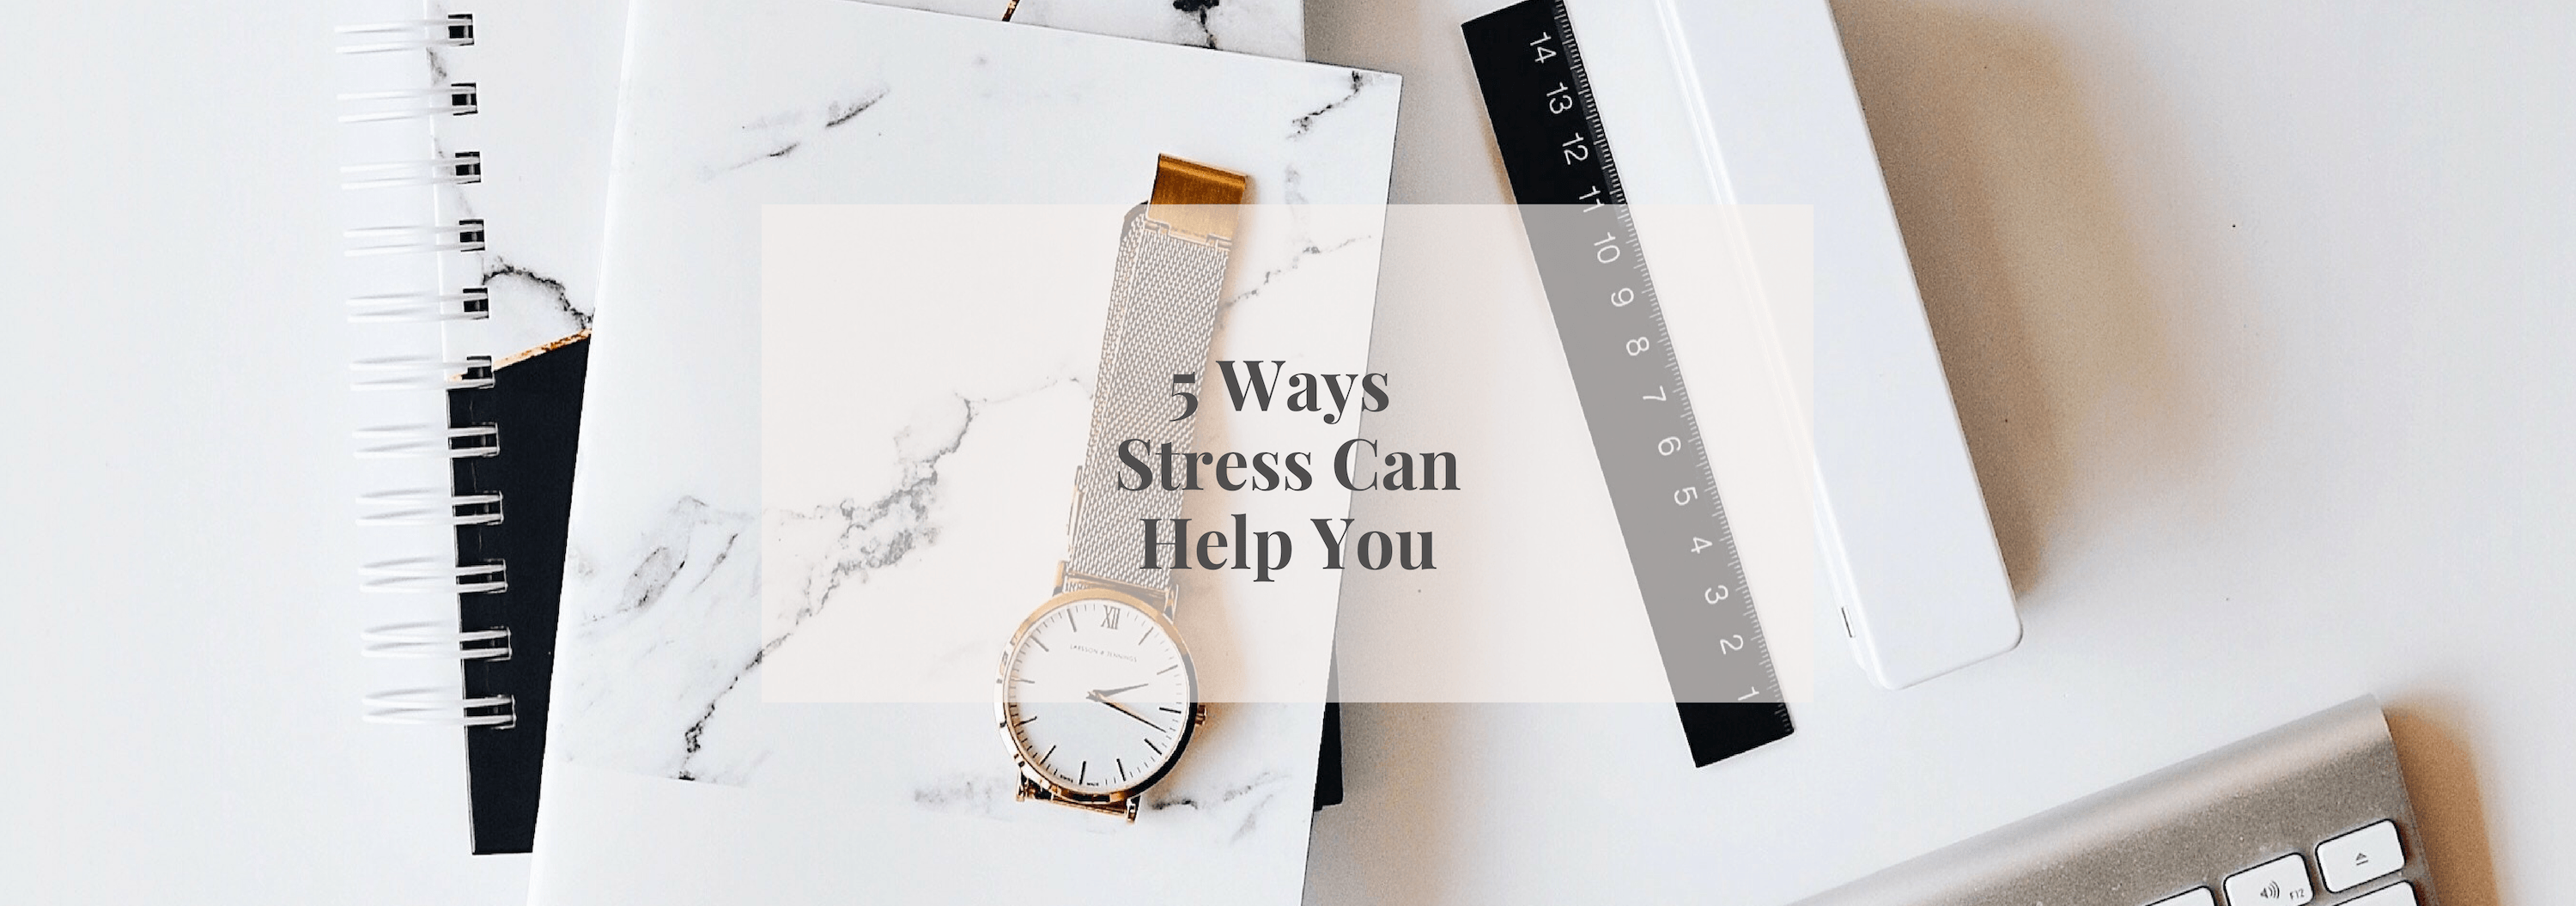 5 Ways Stress Can Help You - Numi